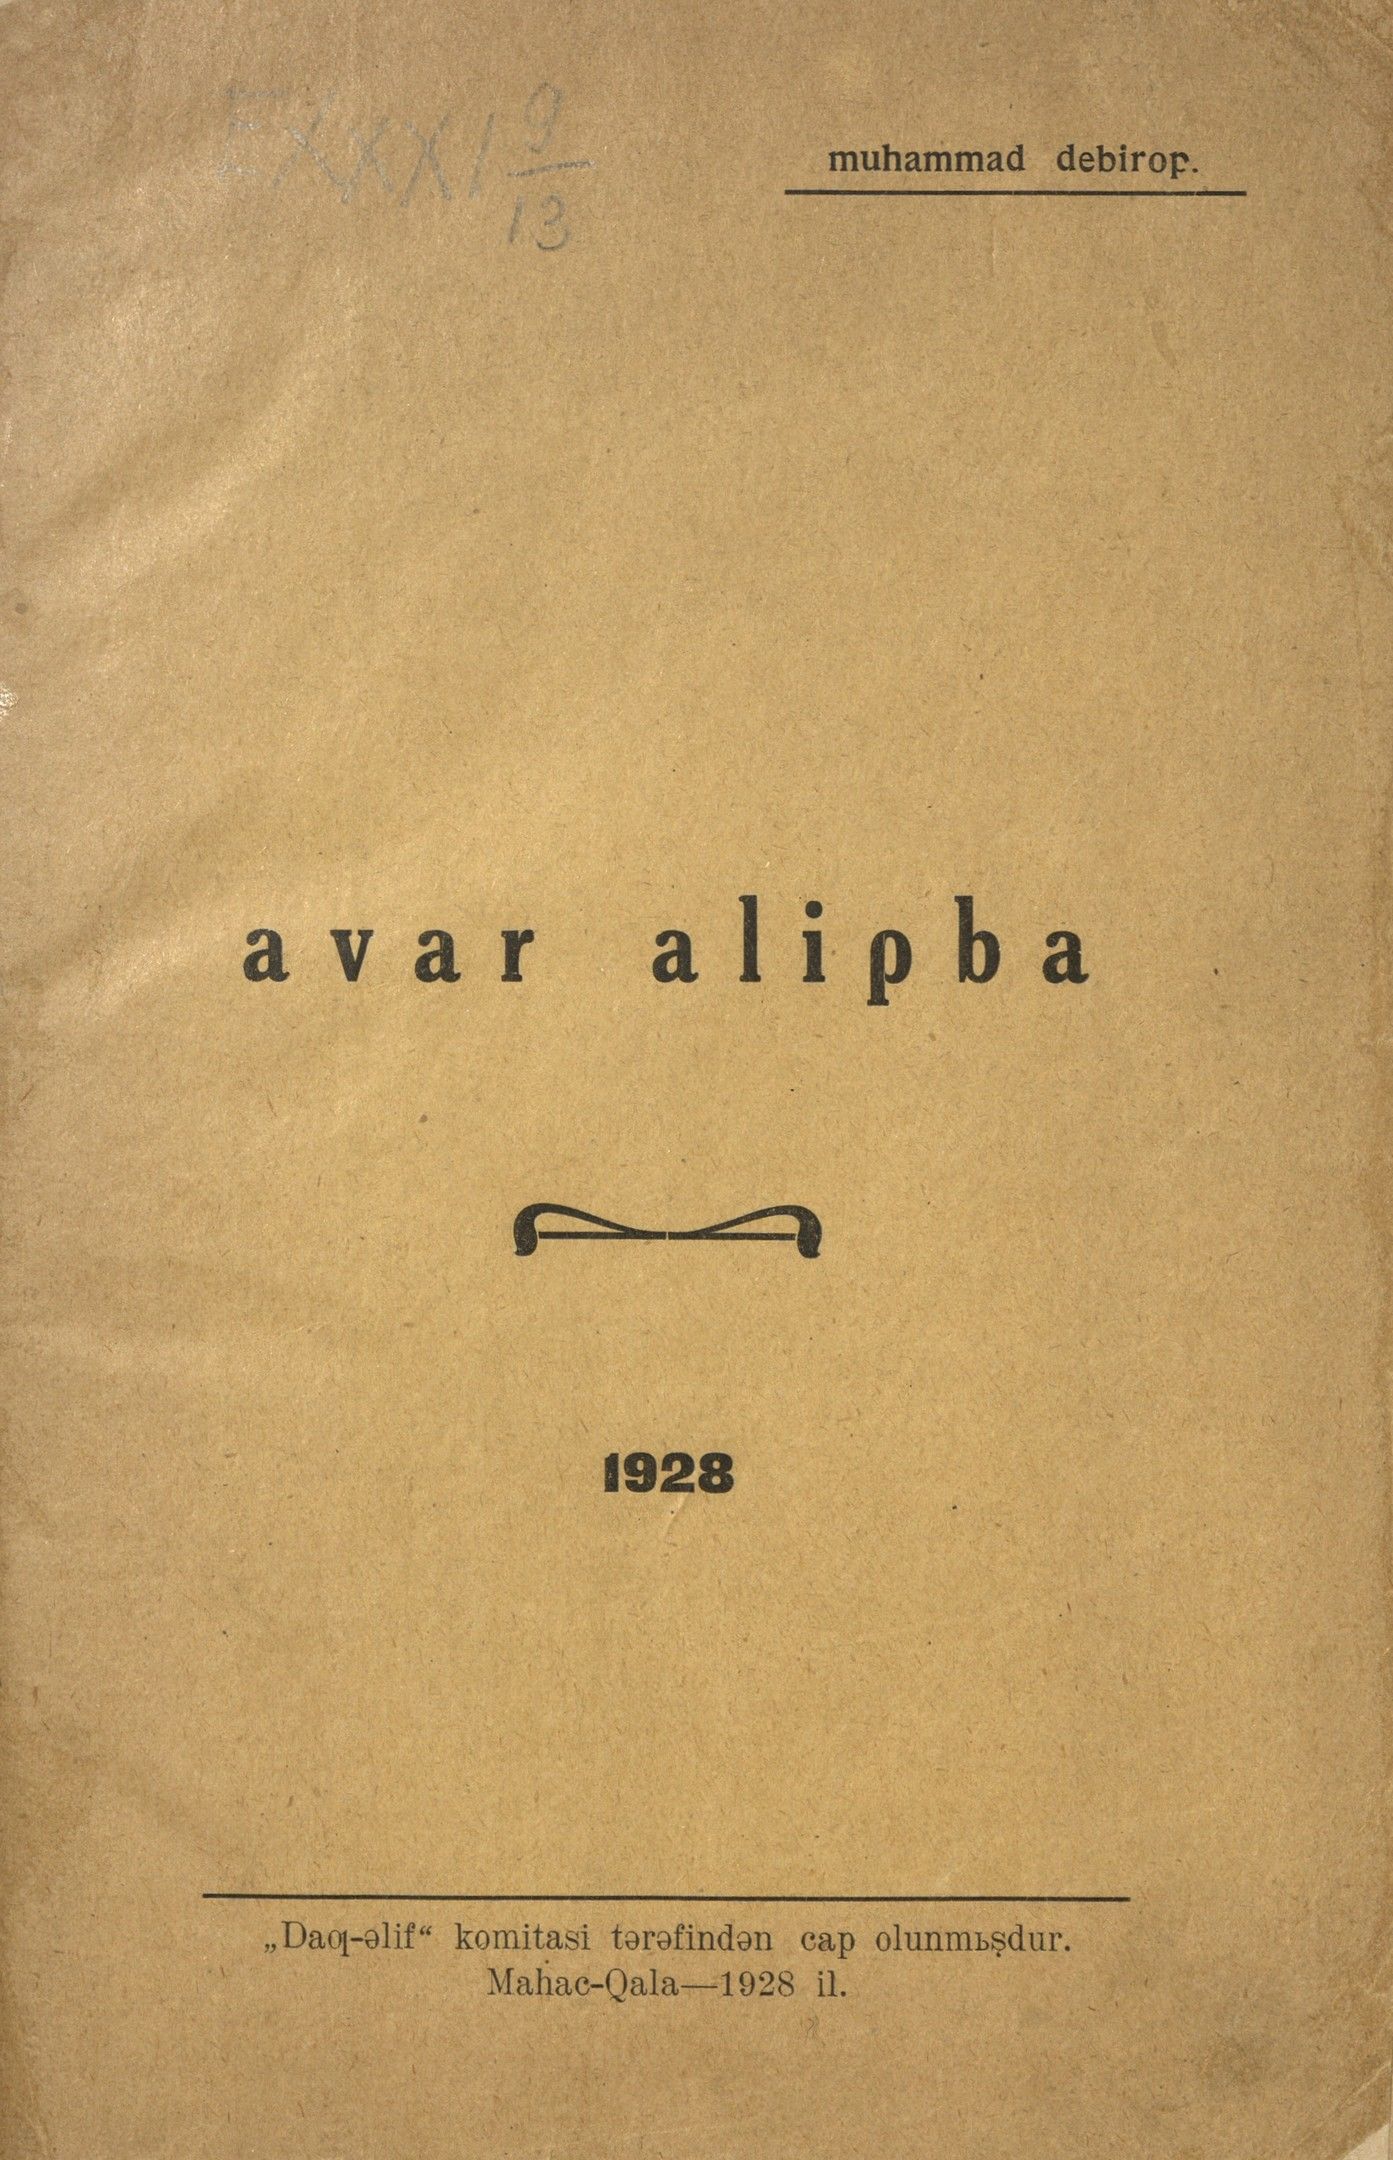 Дебиров Магомед - Avar alipba - 1928